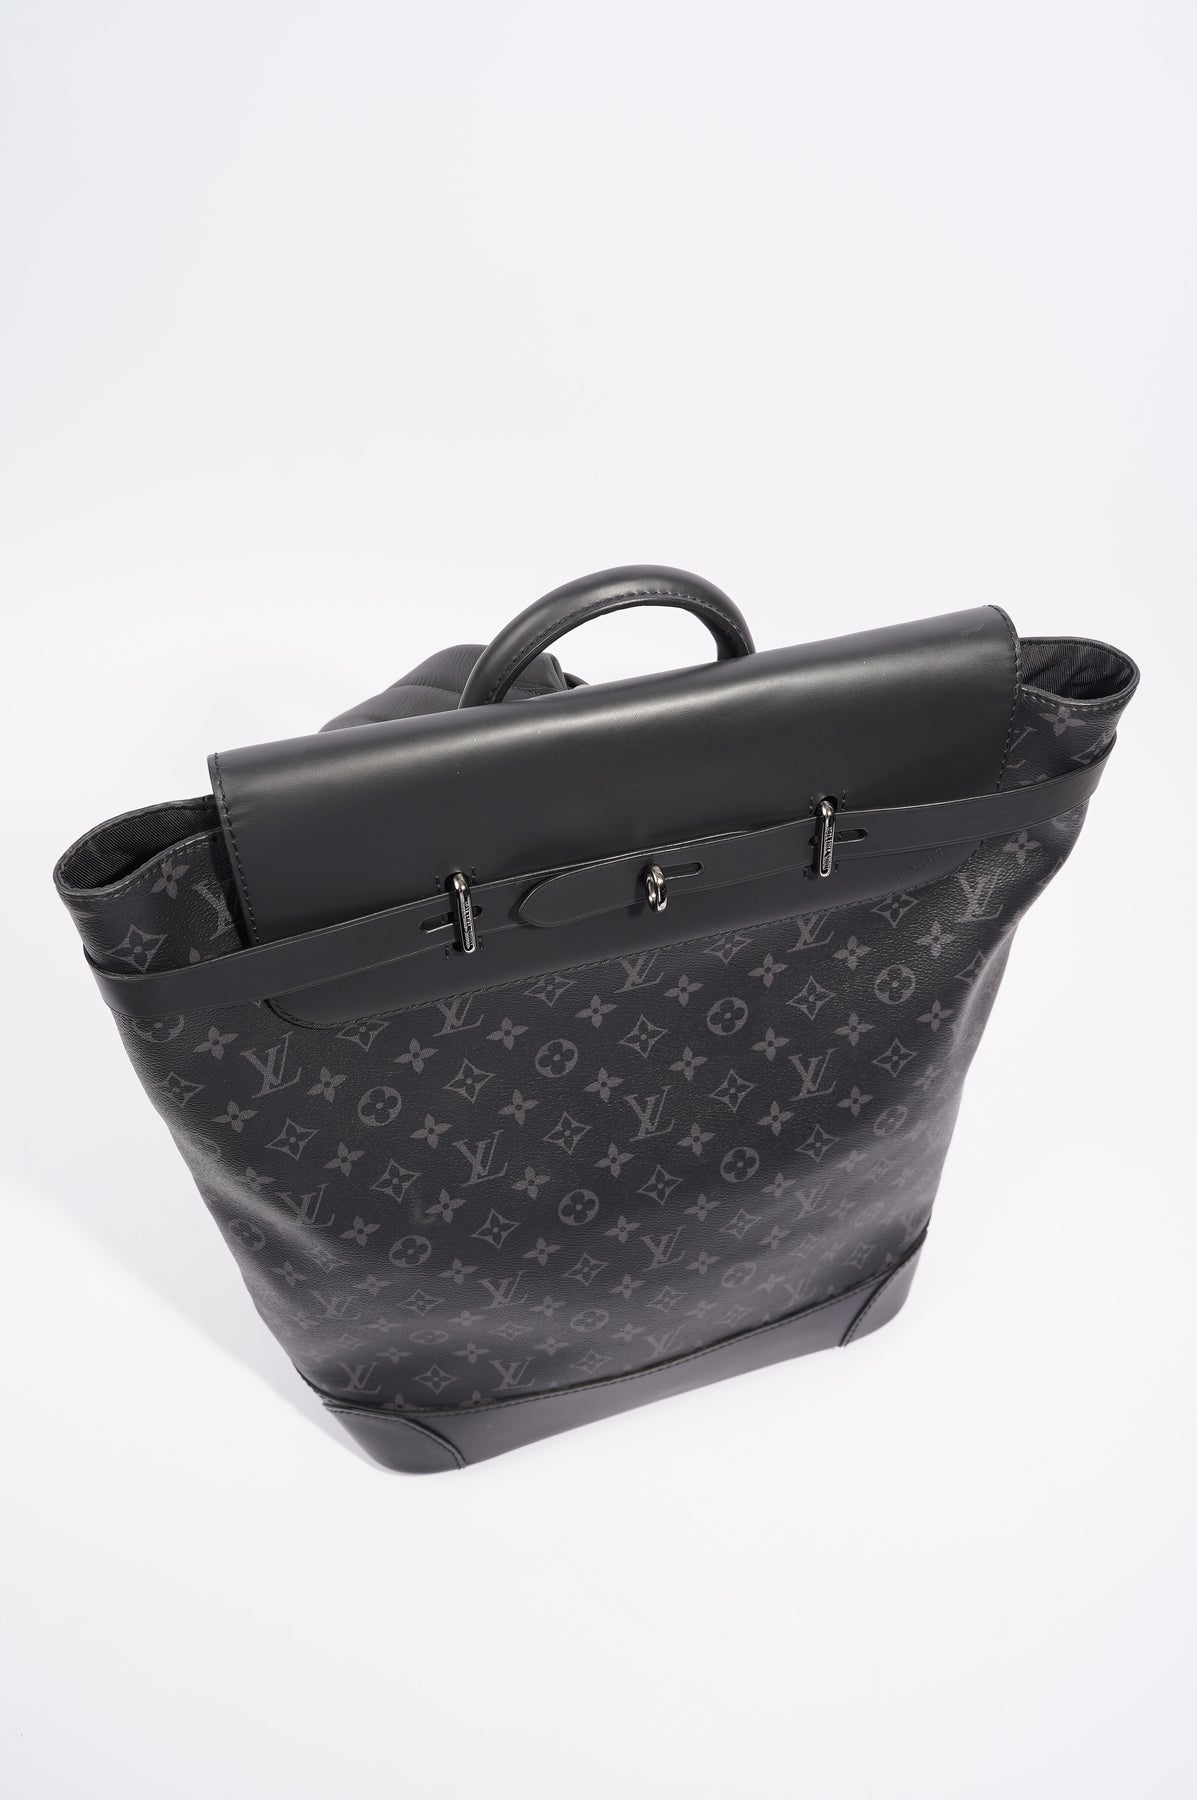 Louis Vuitton Rare Limited Black Monogram Eclipse Steamer Backpack 860897